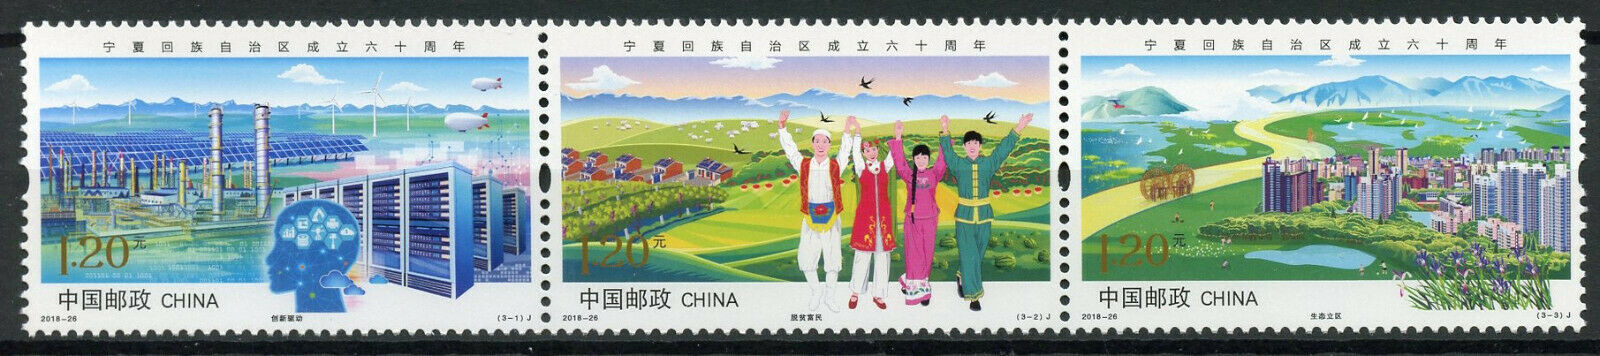 China 2018 MNH Ningxia Hui Autonomous Region 3v Strip Architecture Stamps